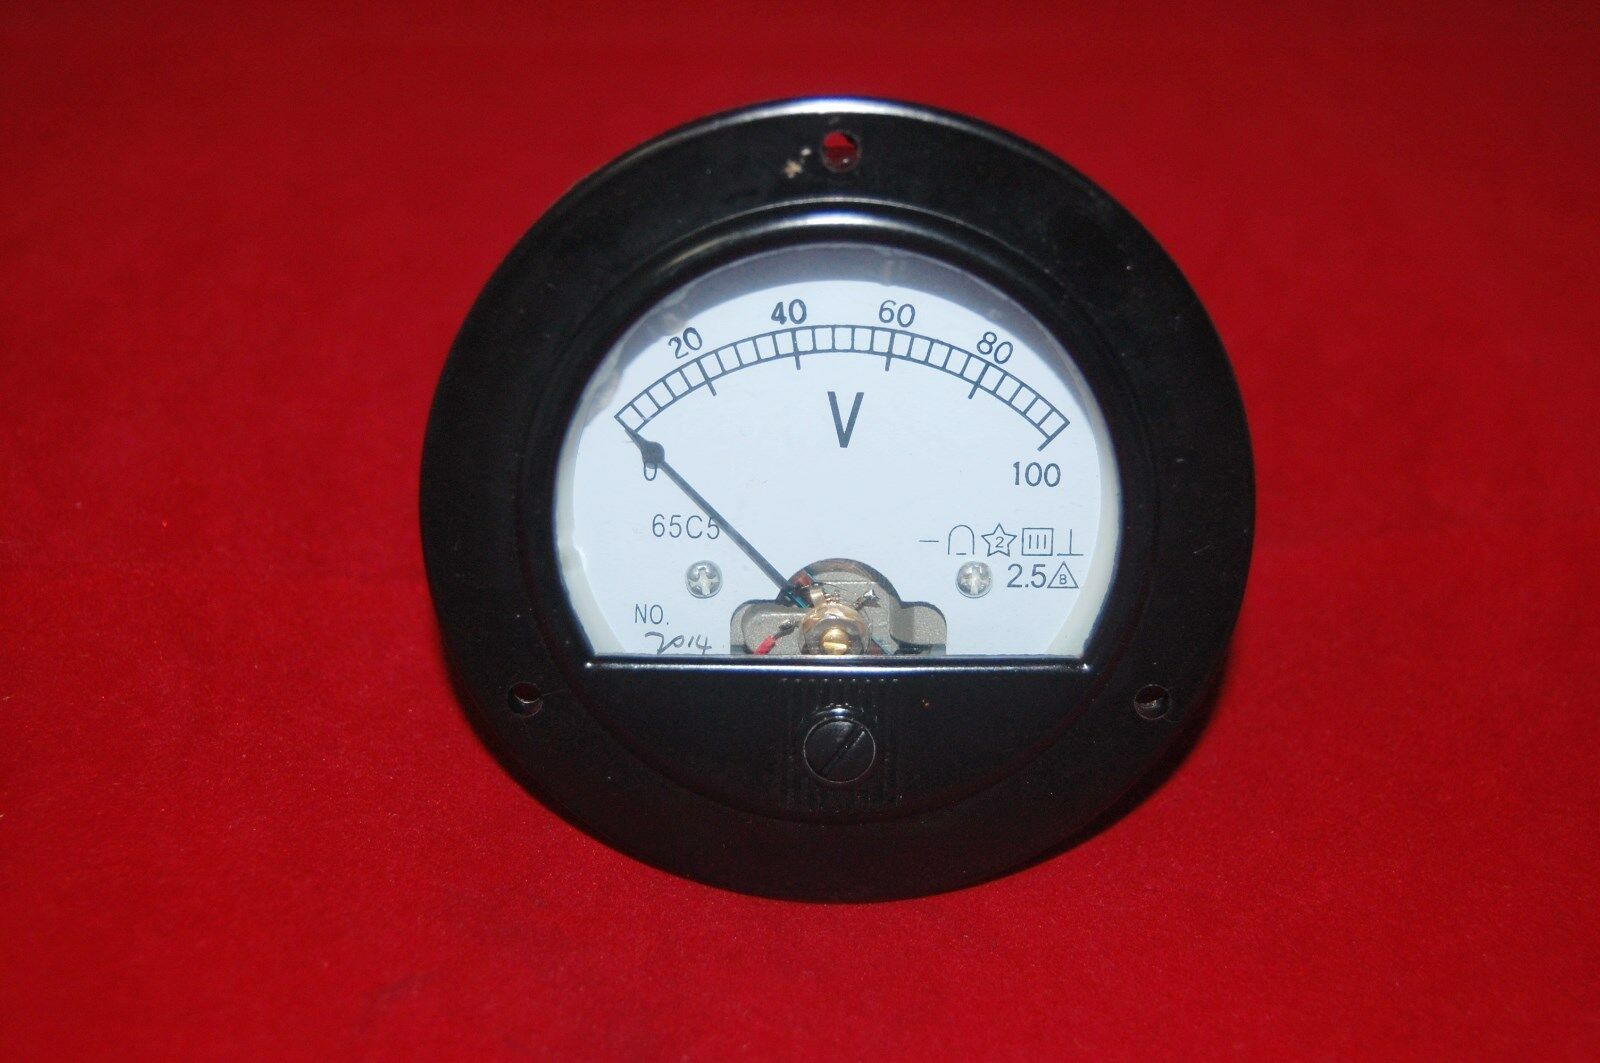 DC 0-100V Analog Voltmeter Voltage Panel Meter Dia. 90mm DH62 direct Connect